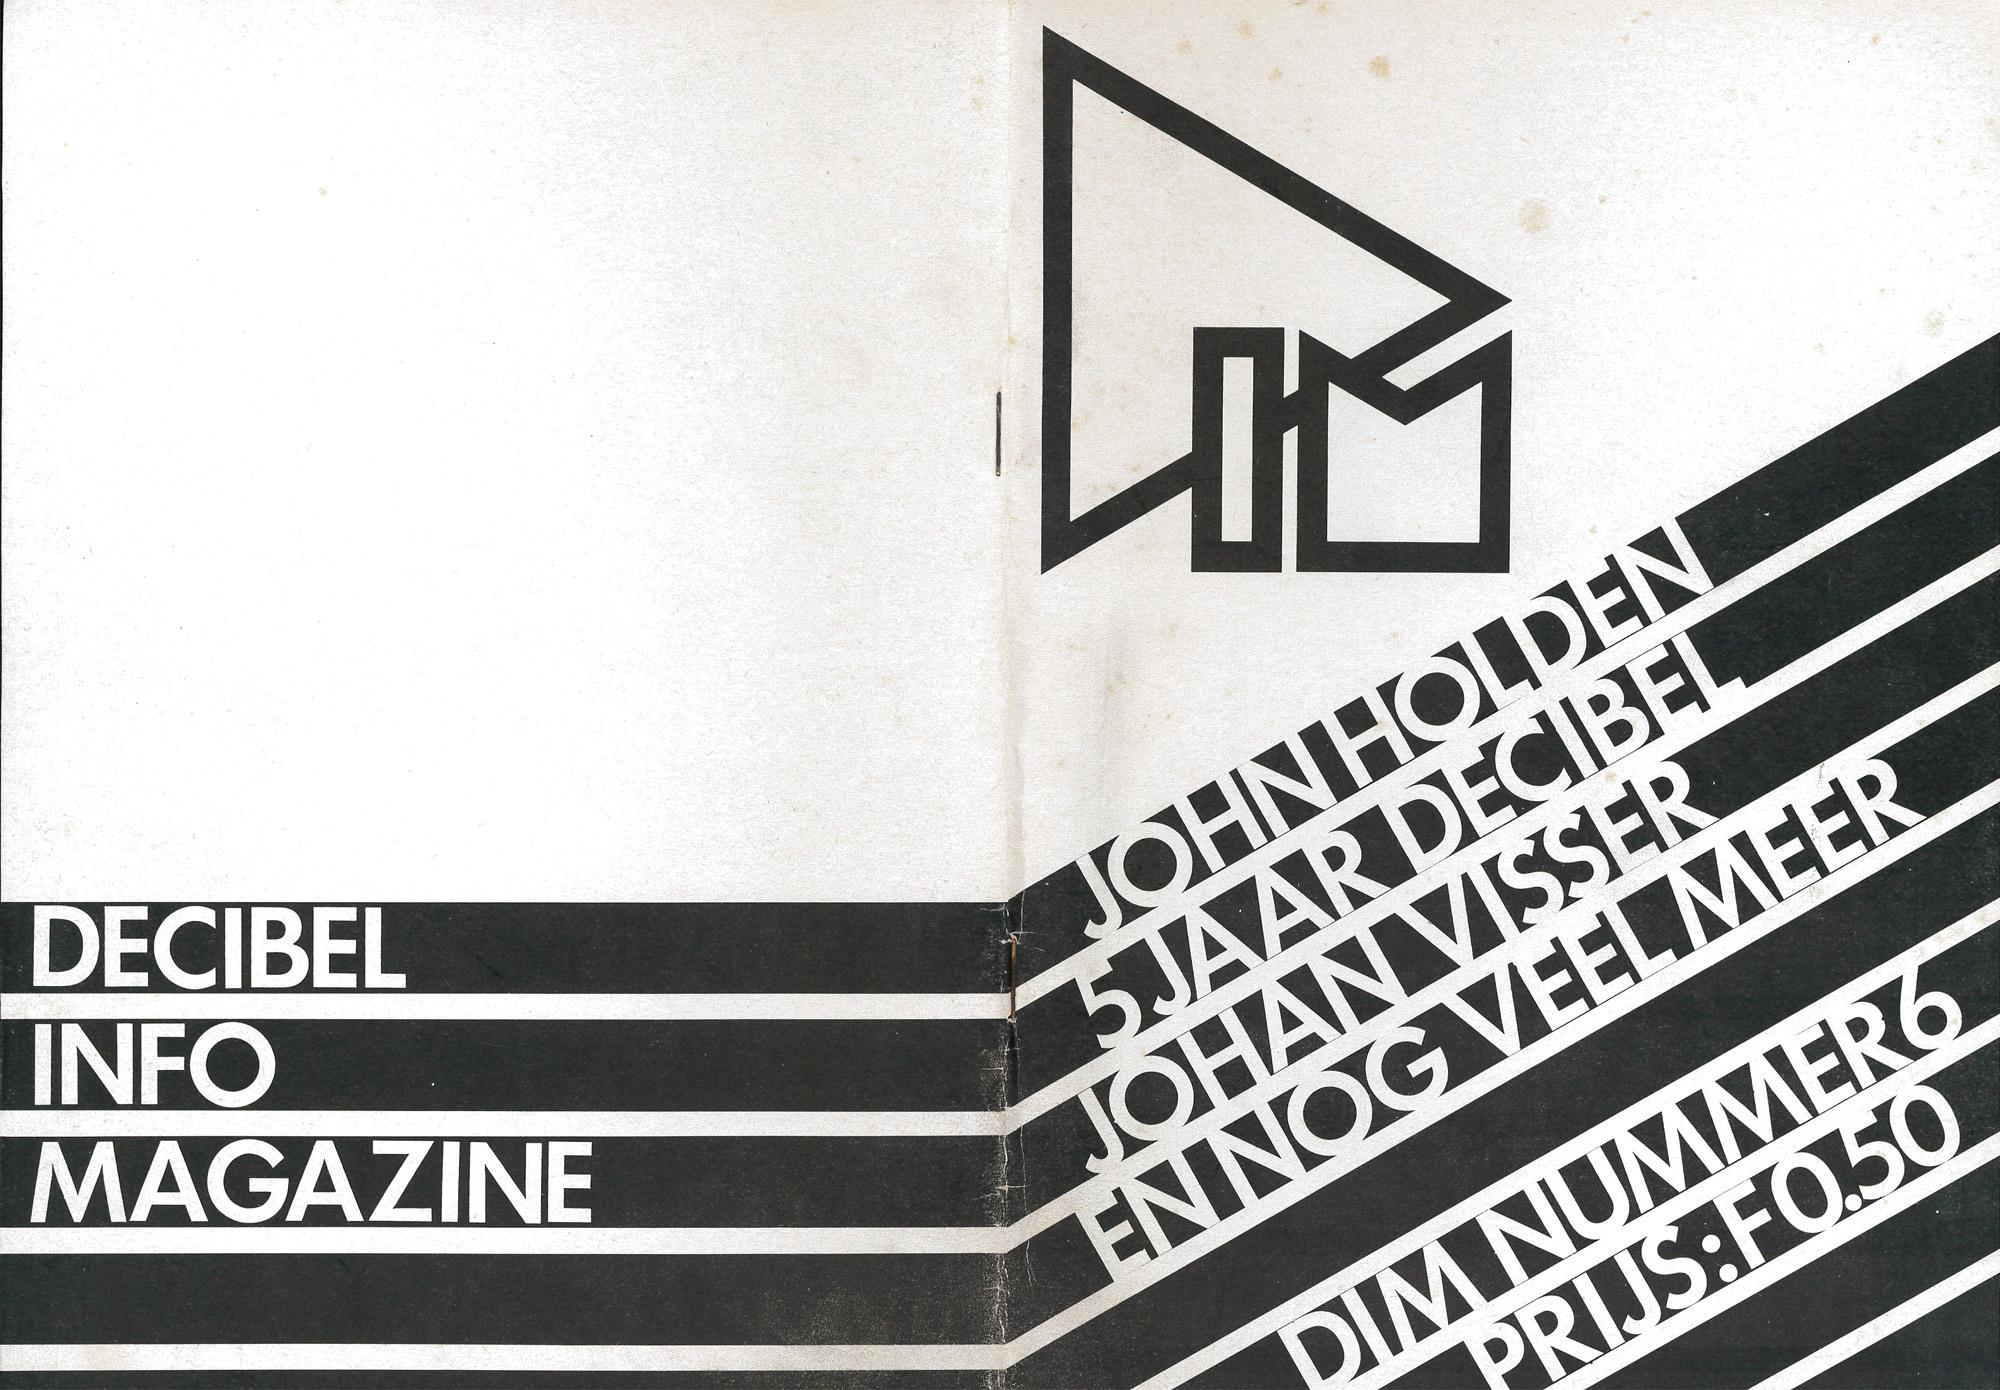 Decibel Info Magazine - 06 - 19820900